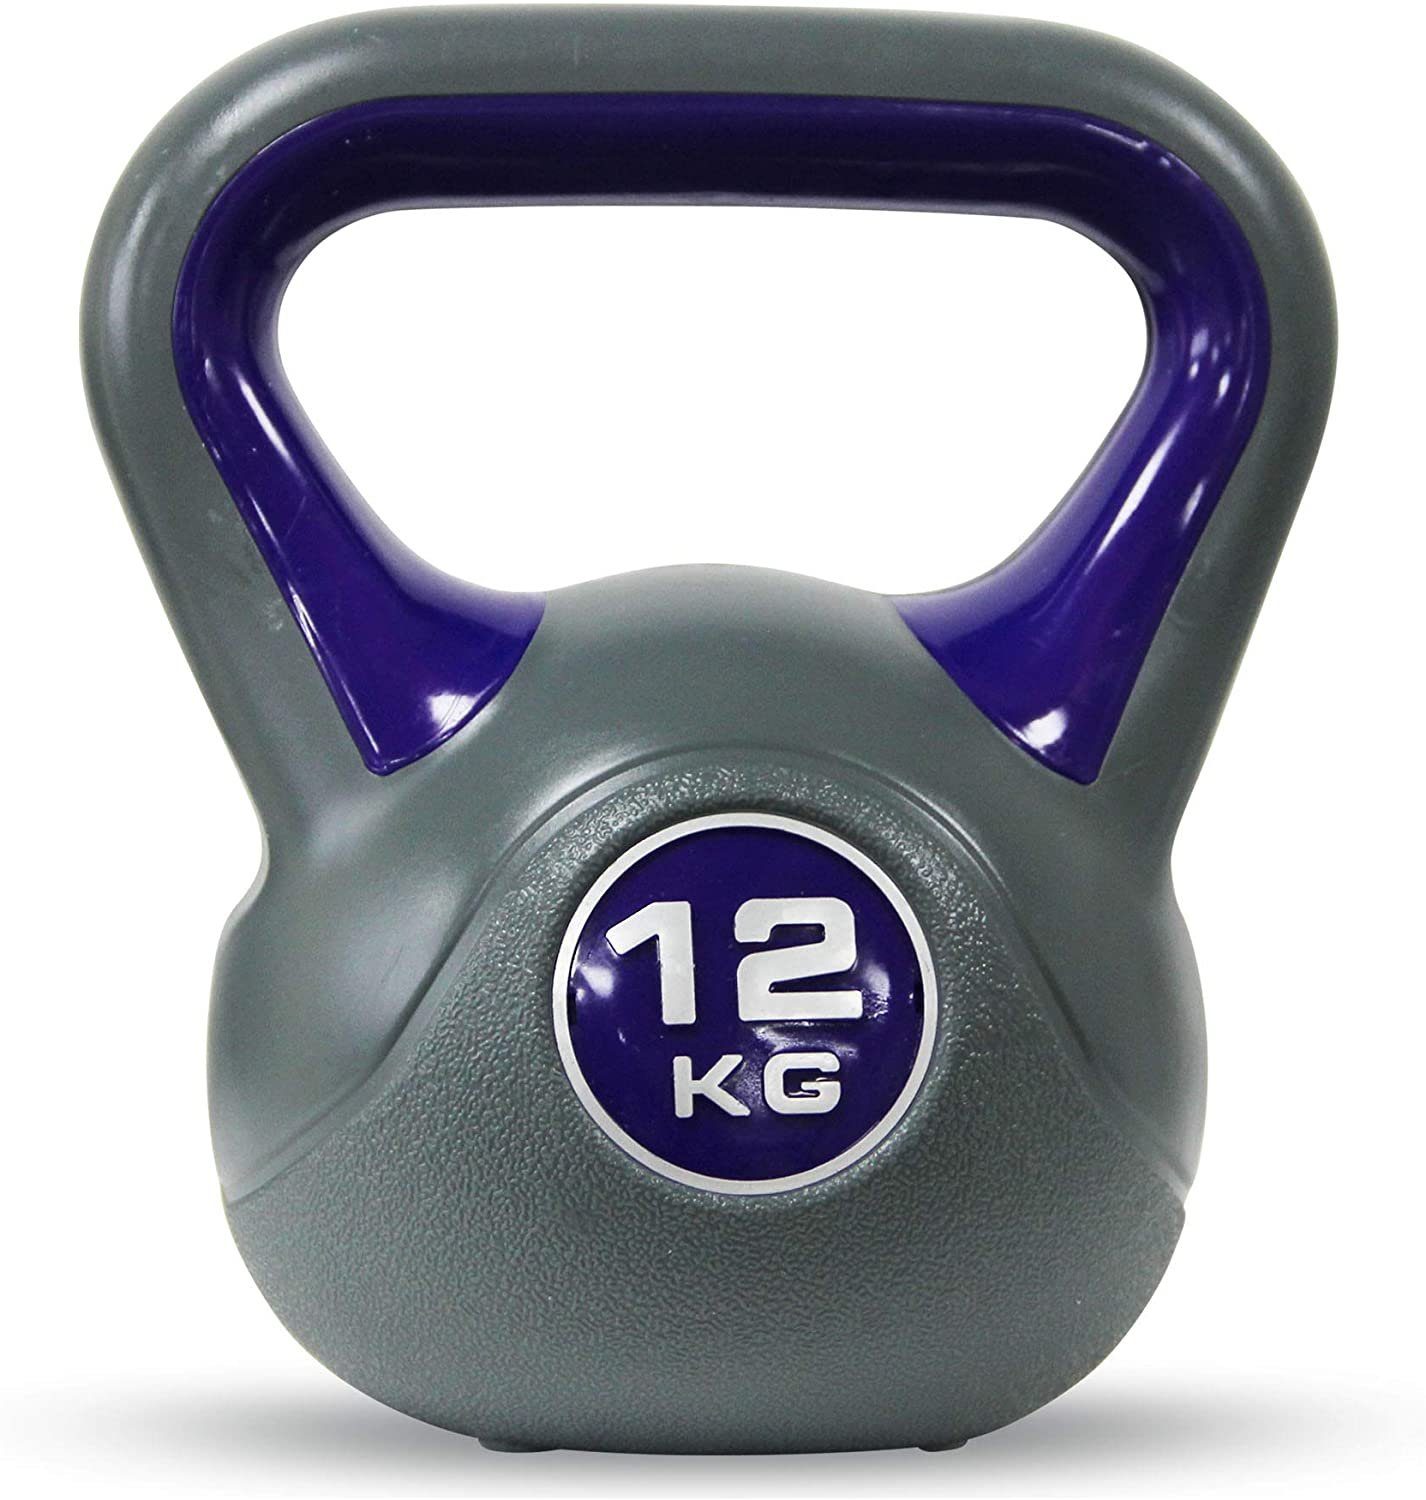 Kg POWRX Farben/Gew., Workout, Kettlebell Kugelhantel versch. kg 2-20 inkl. - 3 Kunststoff Hellblau